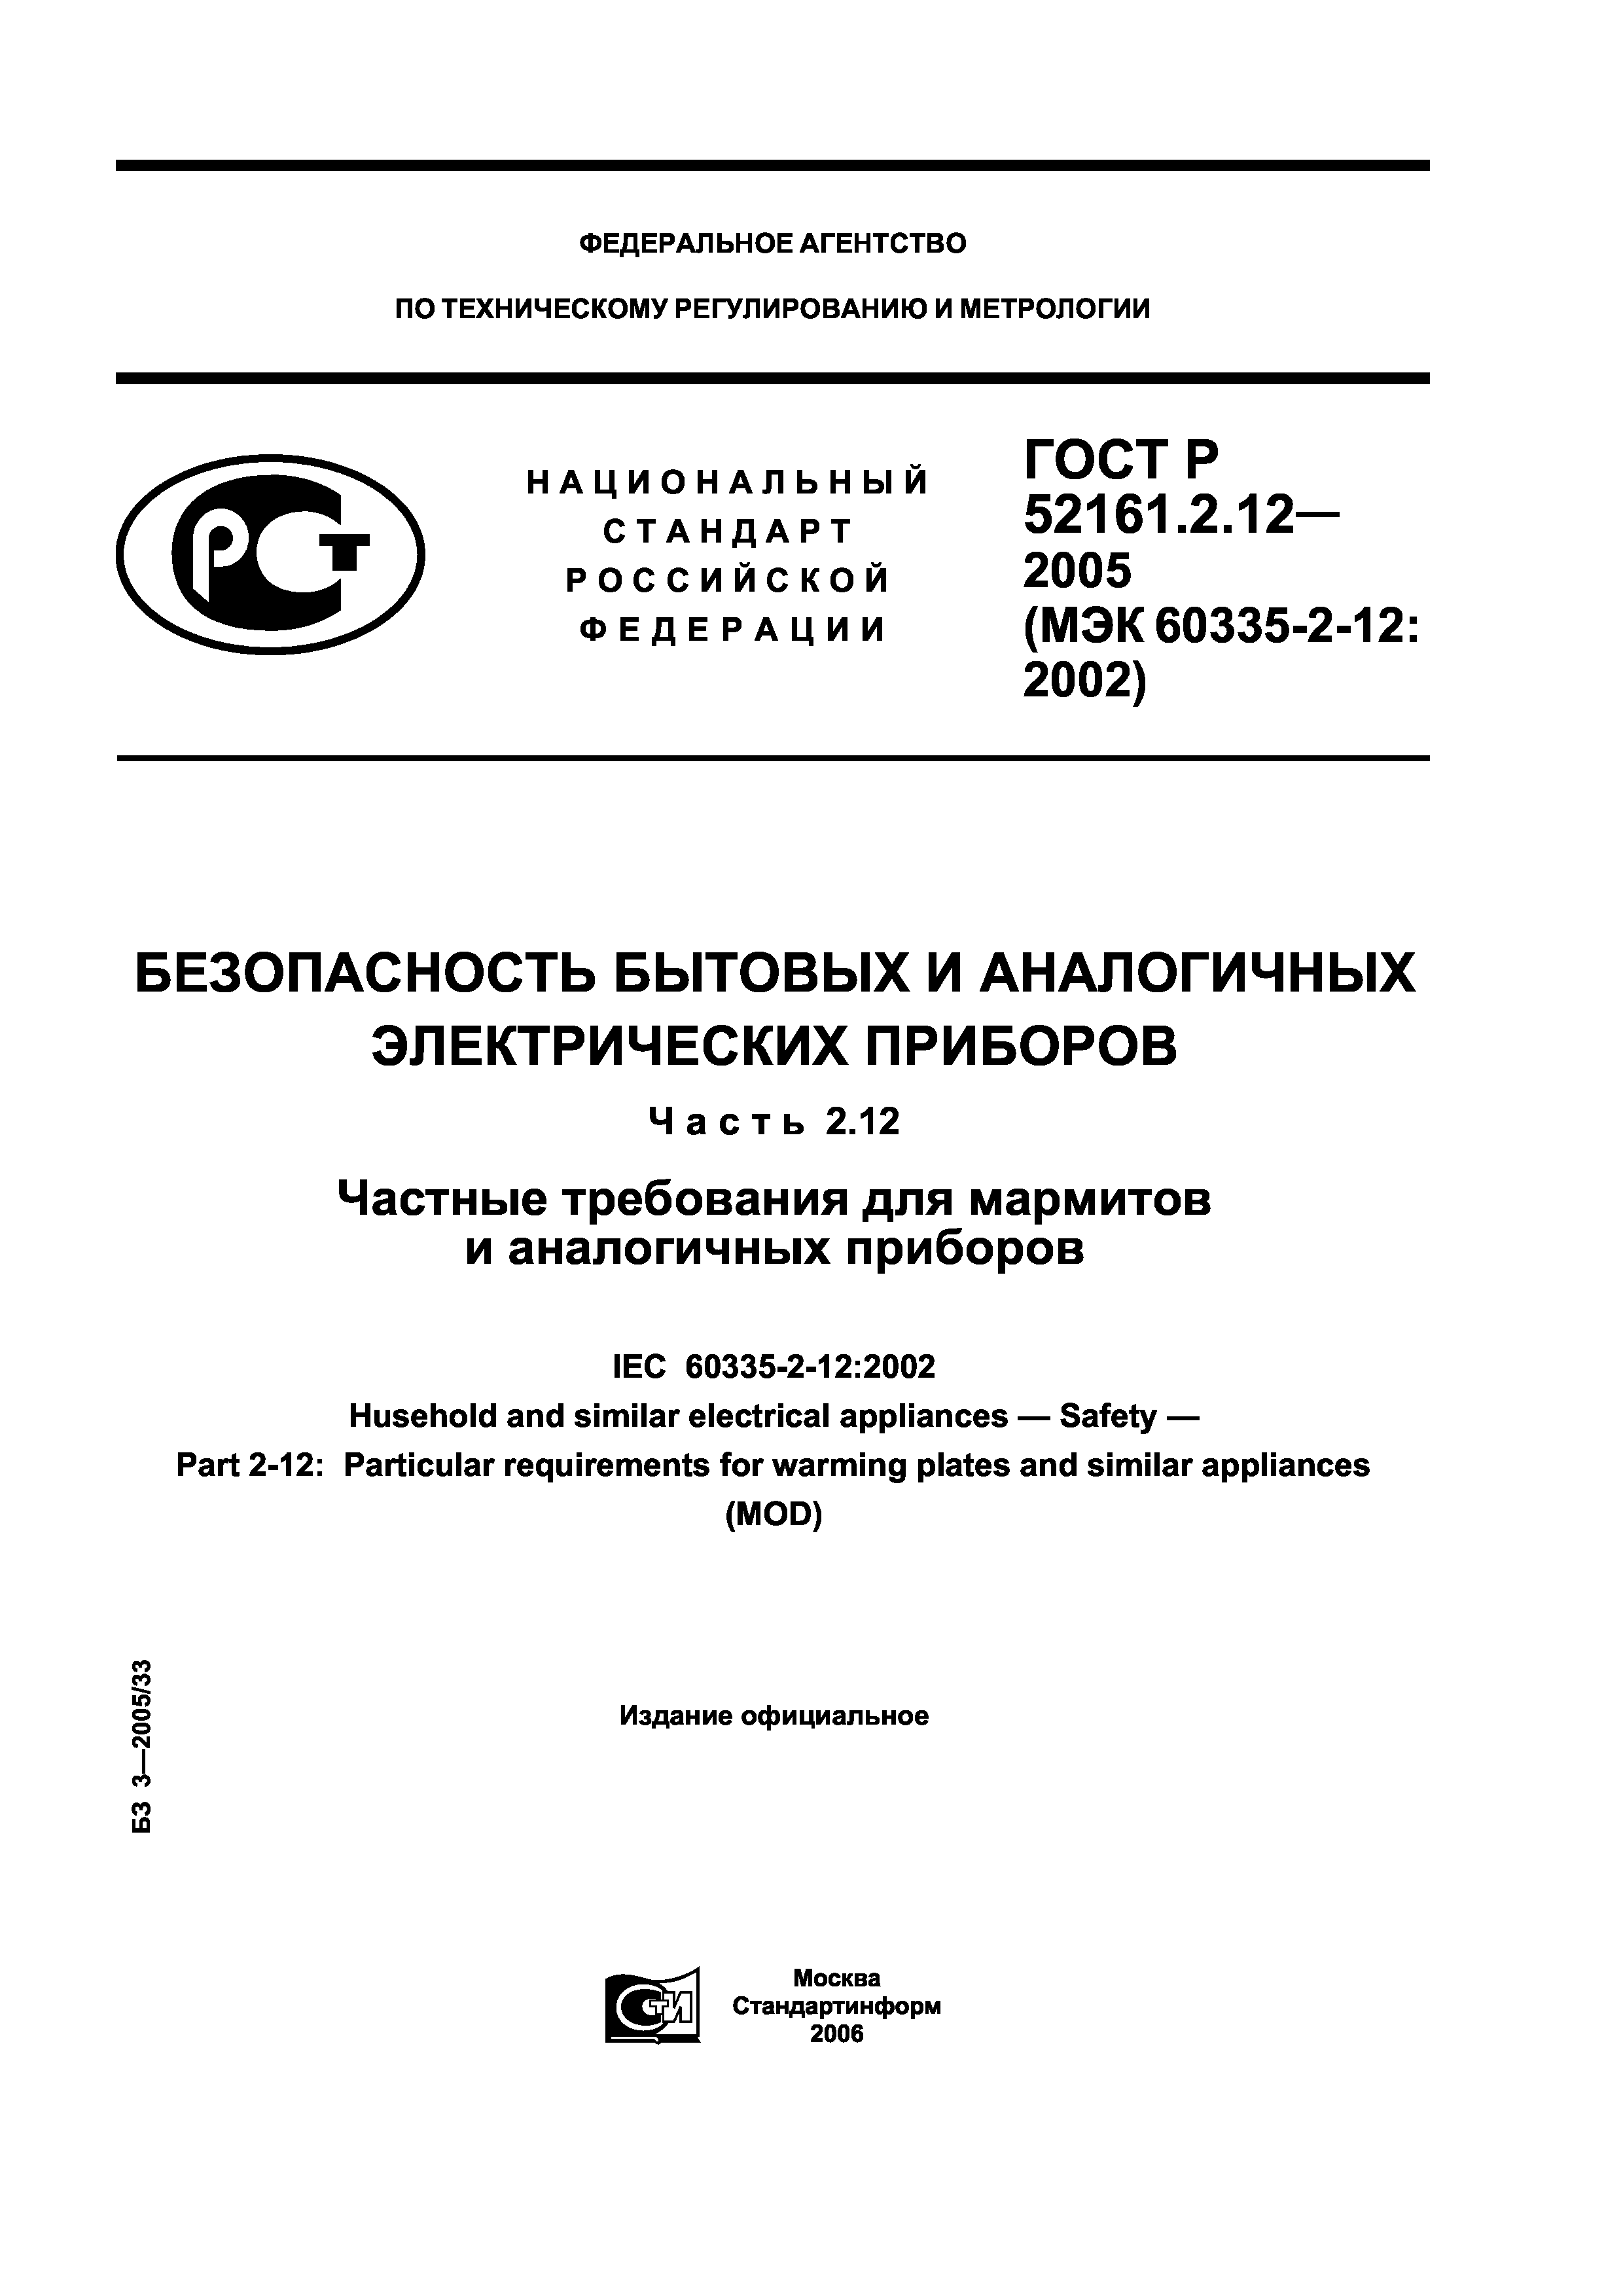 ГОСТ Р 52161.2.12-2005